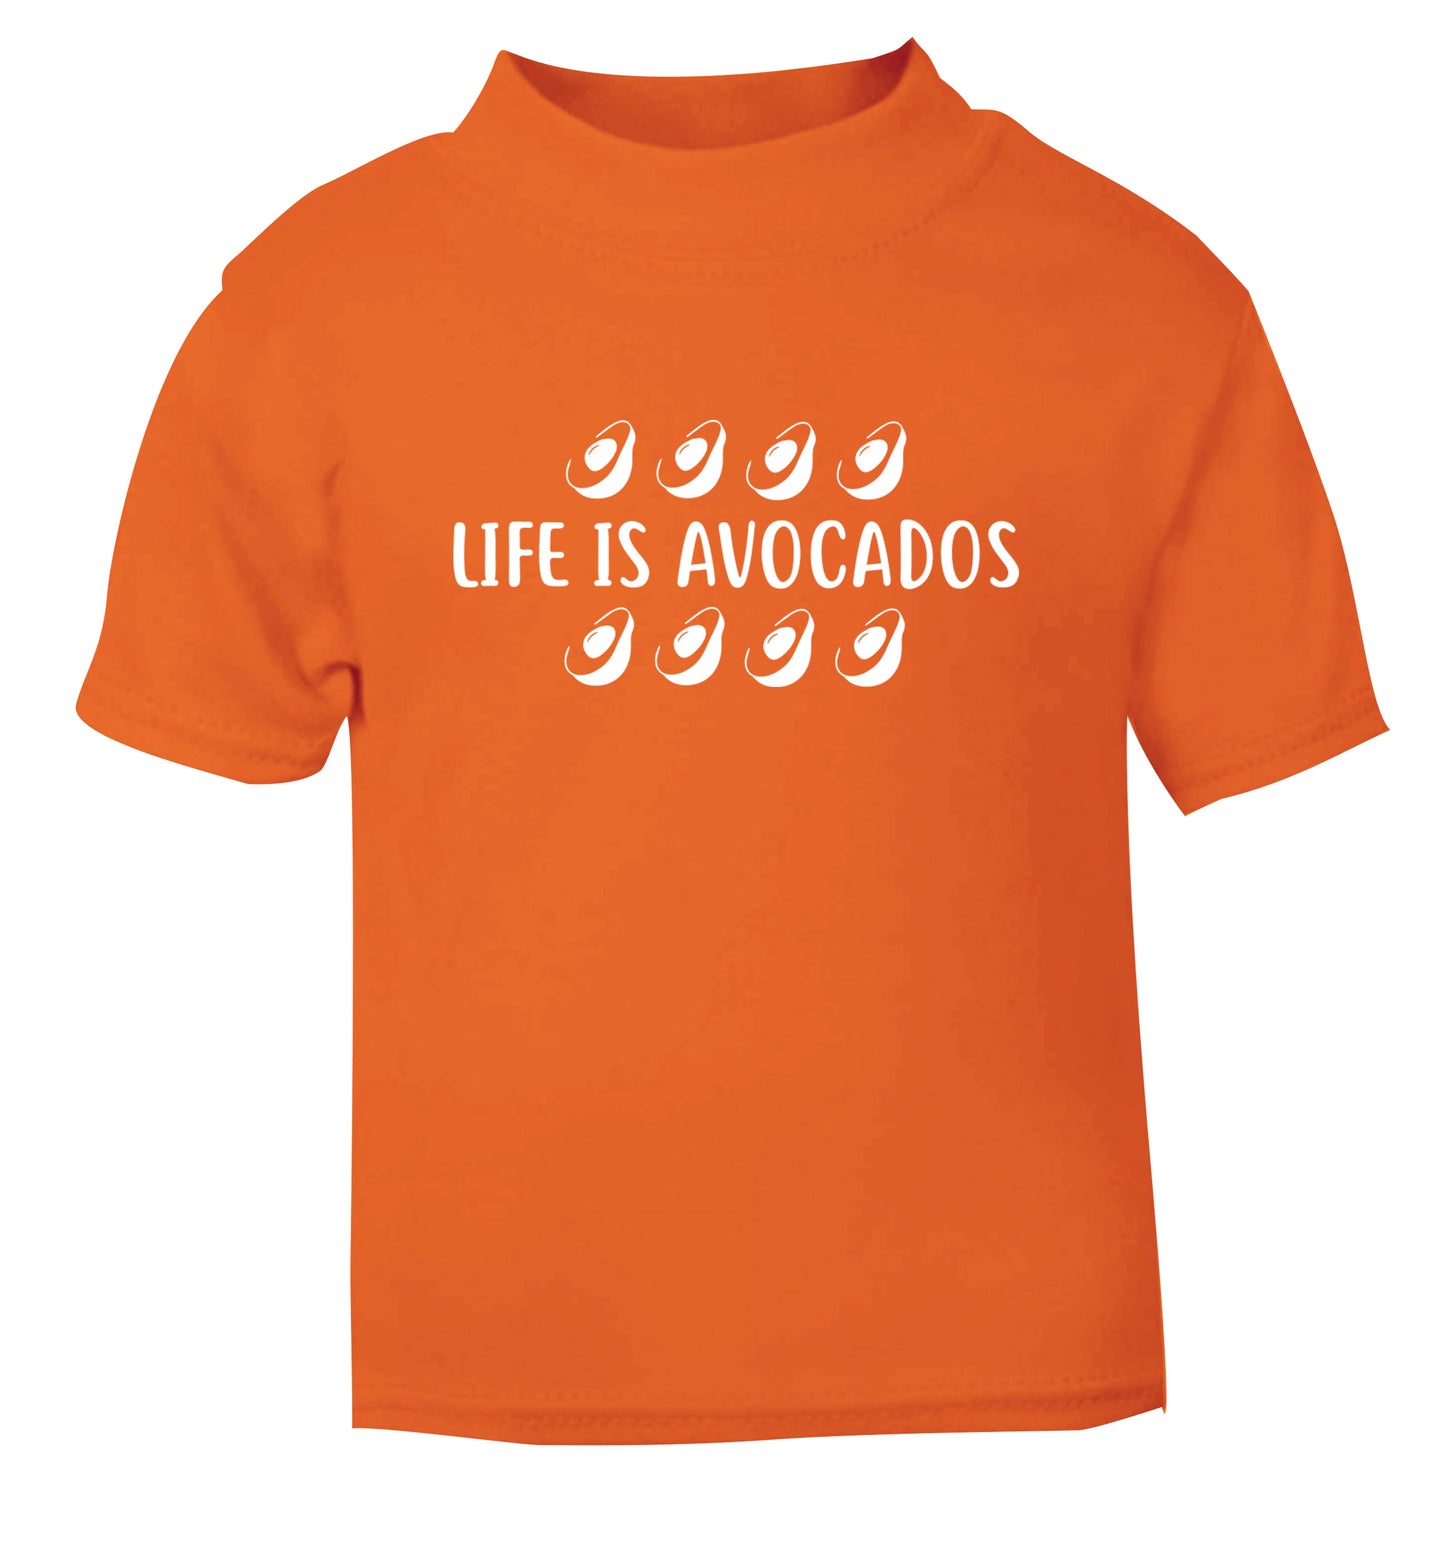 Life is avocados orange Baby Toddler Tshirt 2 Years